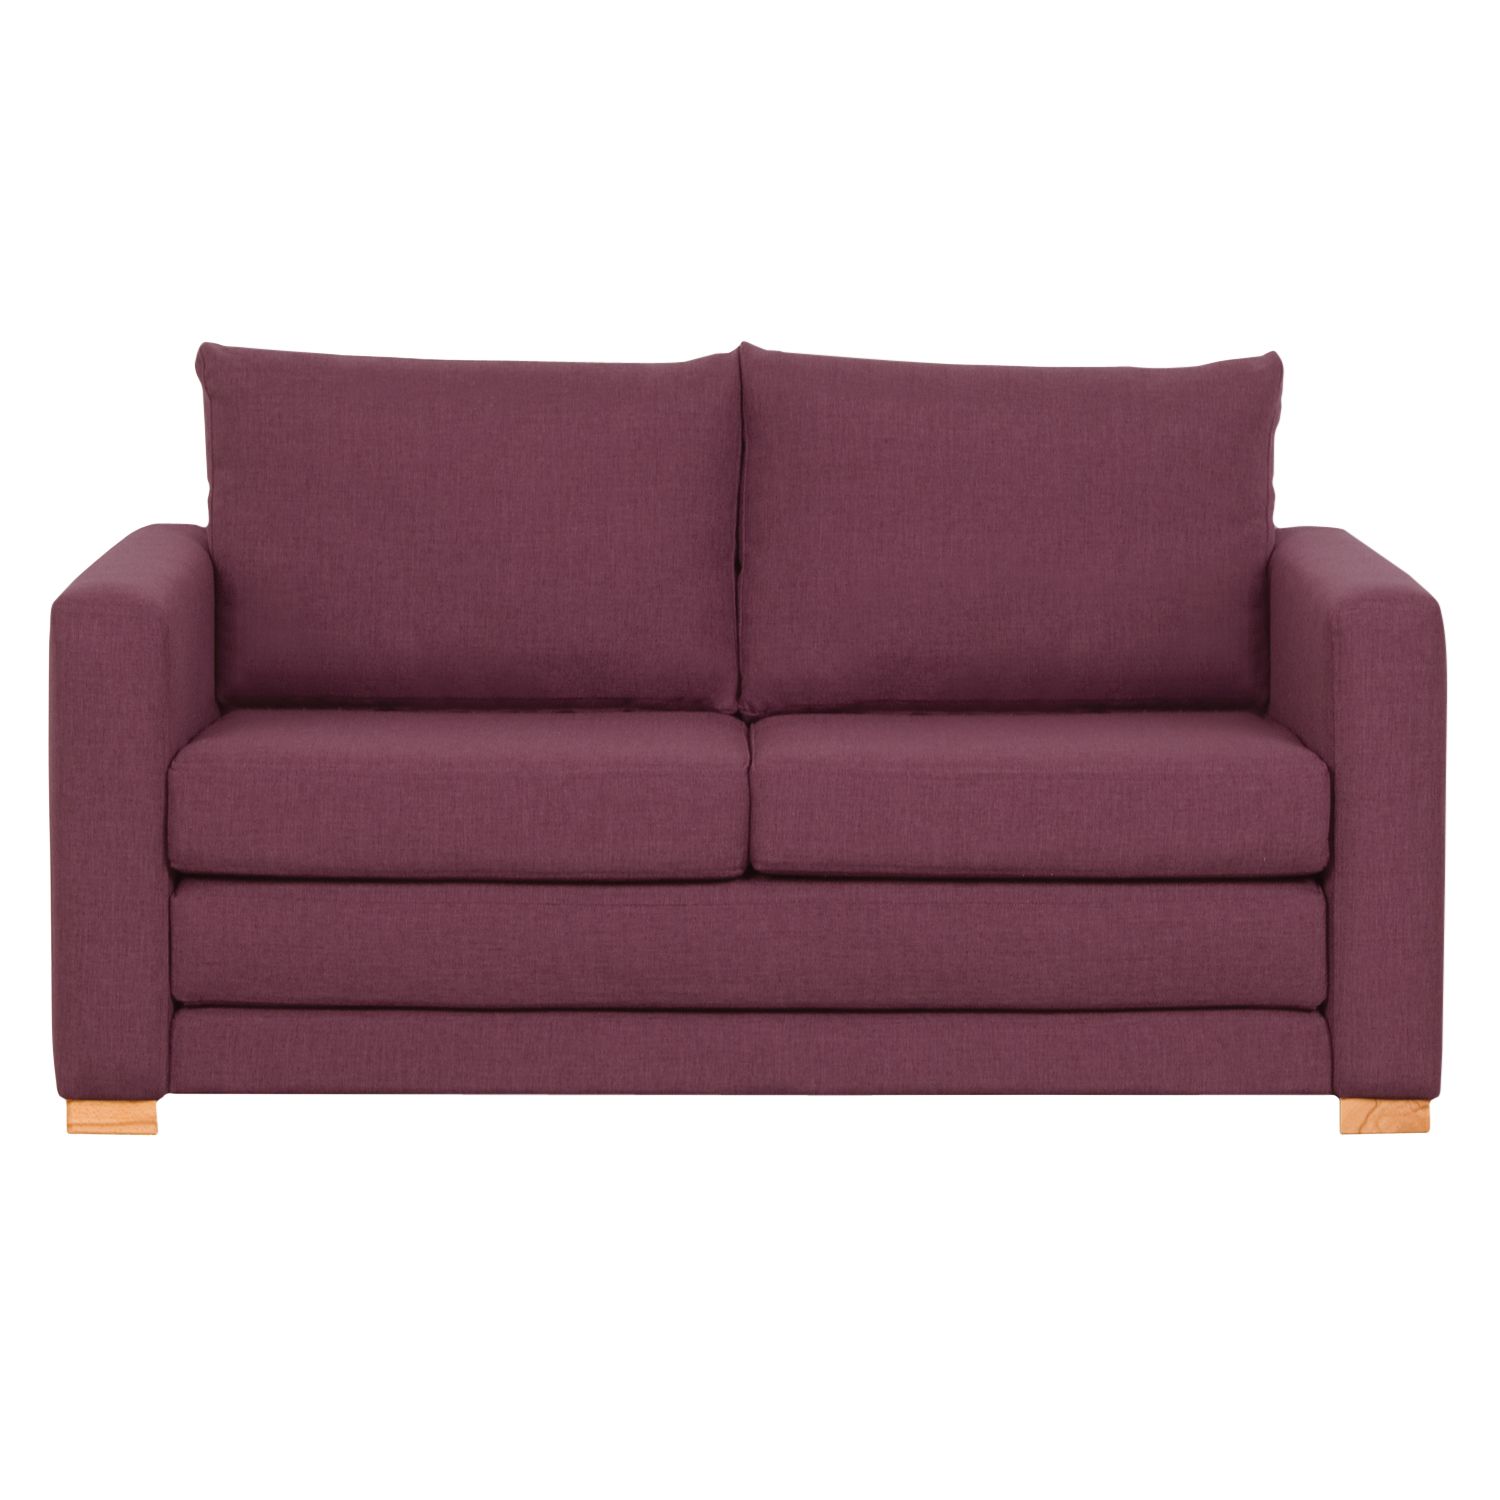 Maisie Small Sofa Bed, Damson / Light